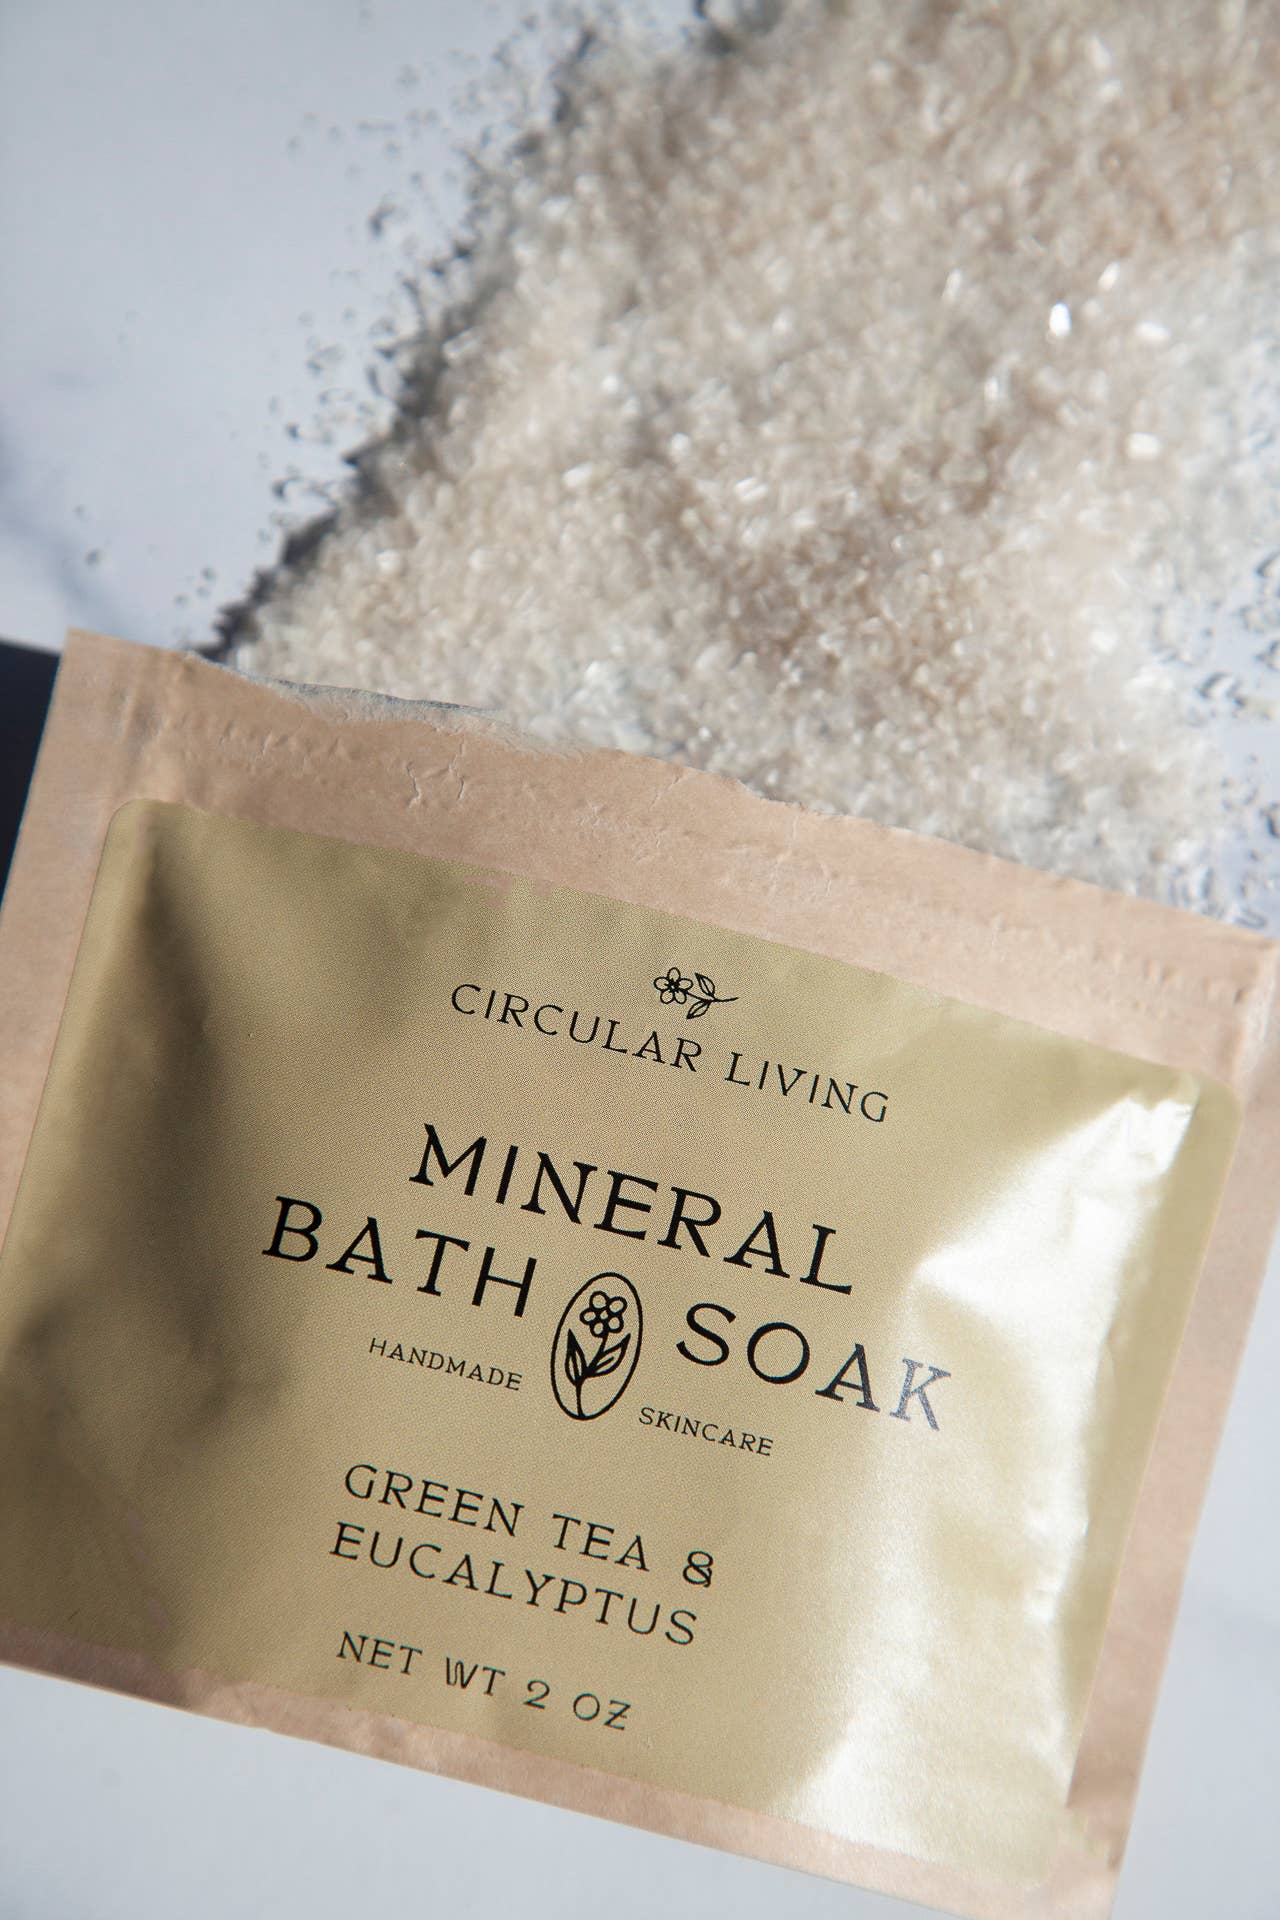 Mineral Bath Soak Sachet